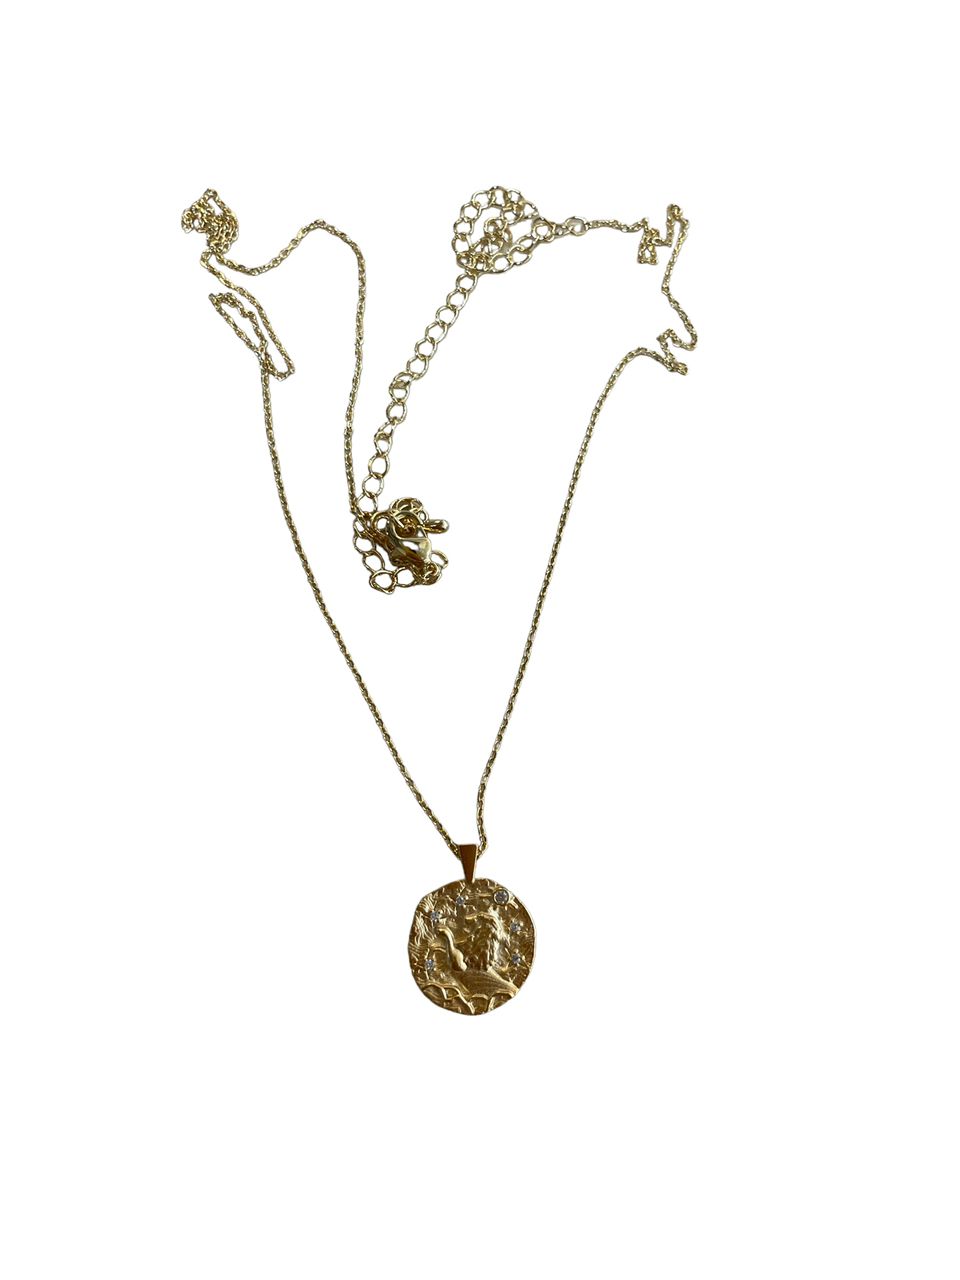 Necklace Astrological sign LEO - مجوهرات